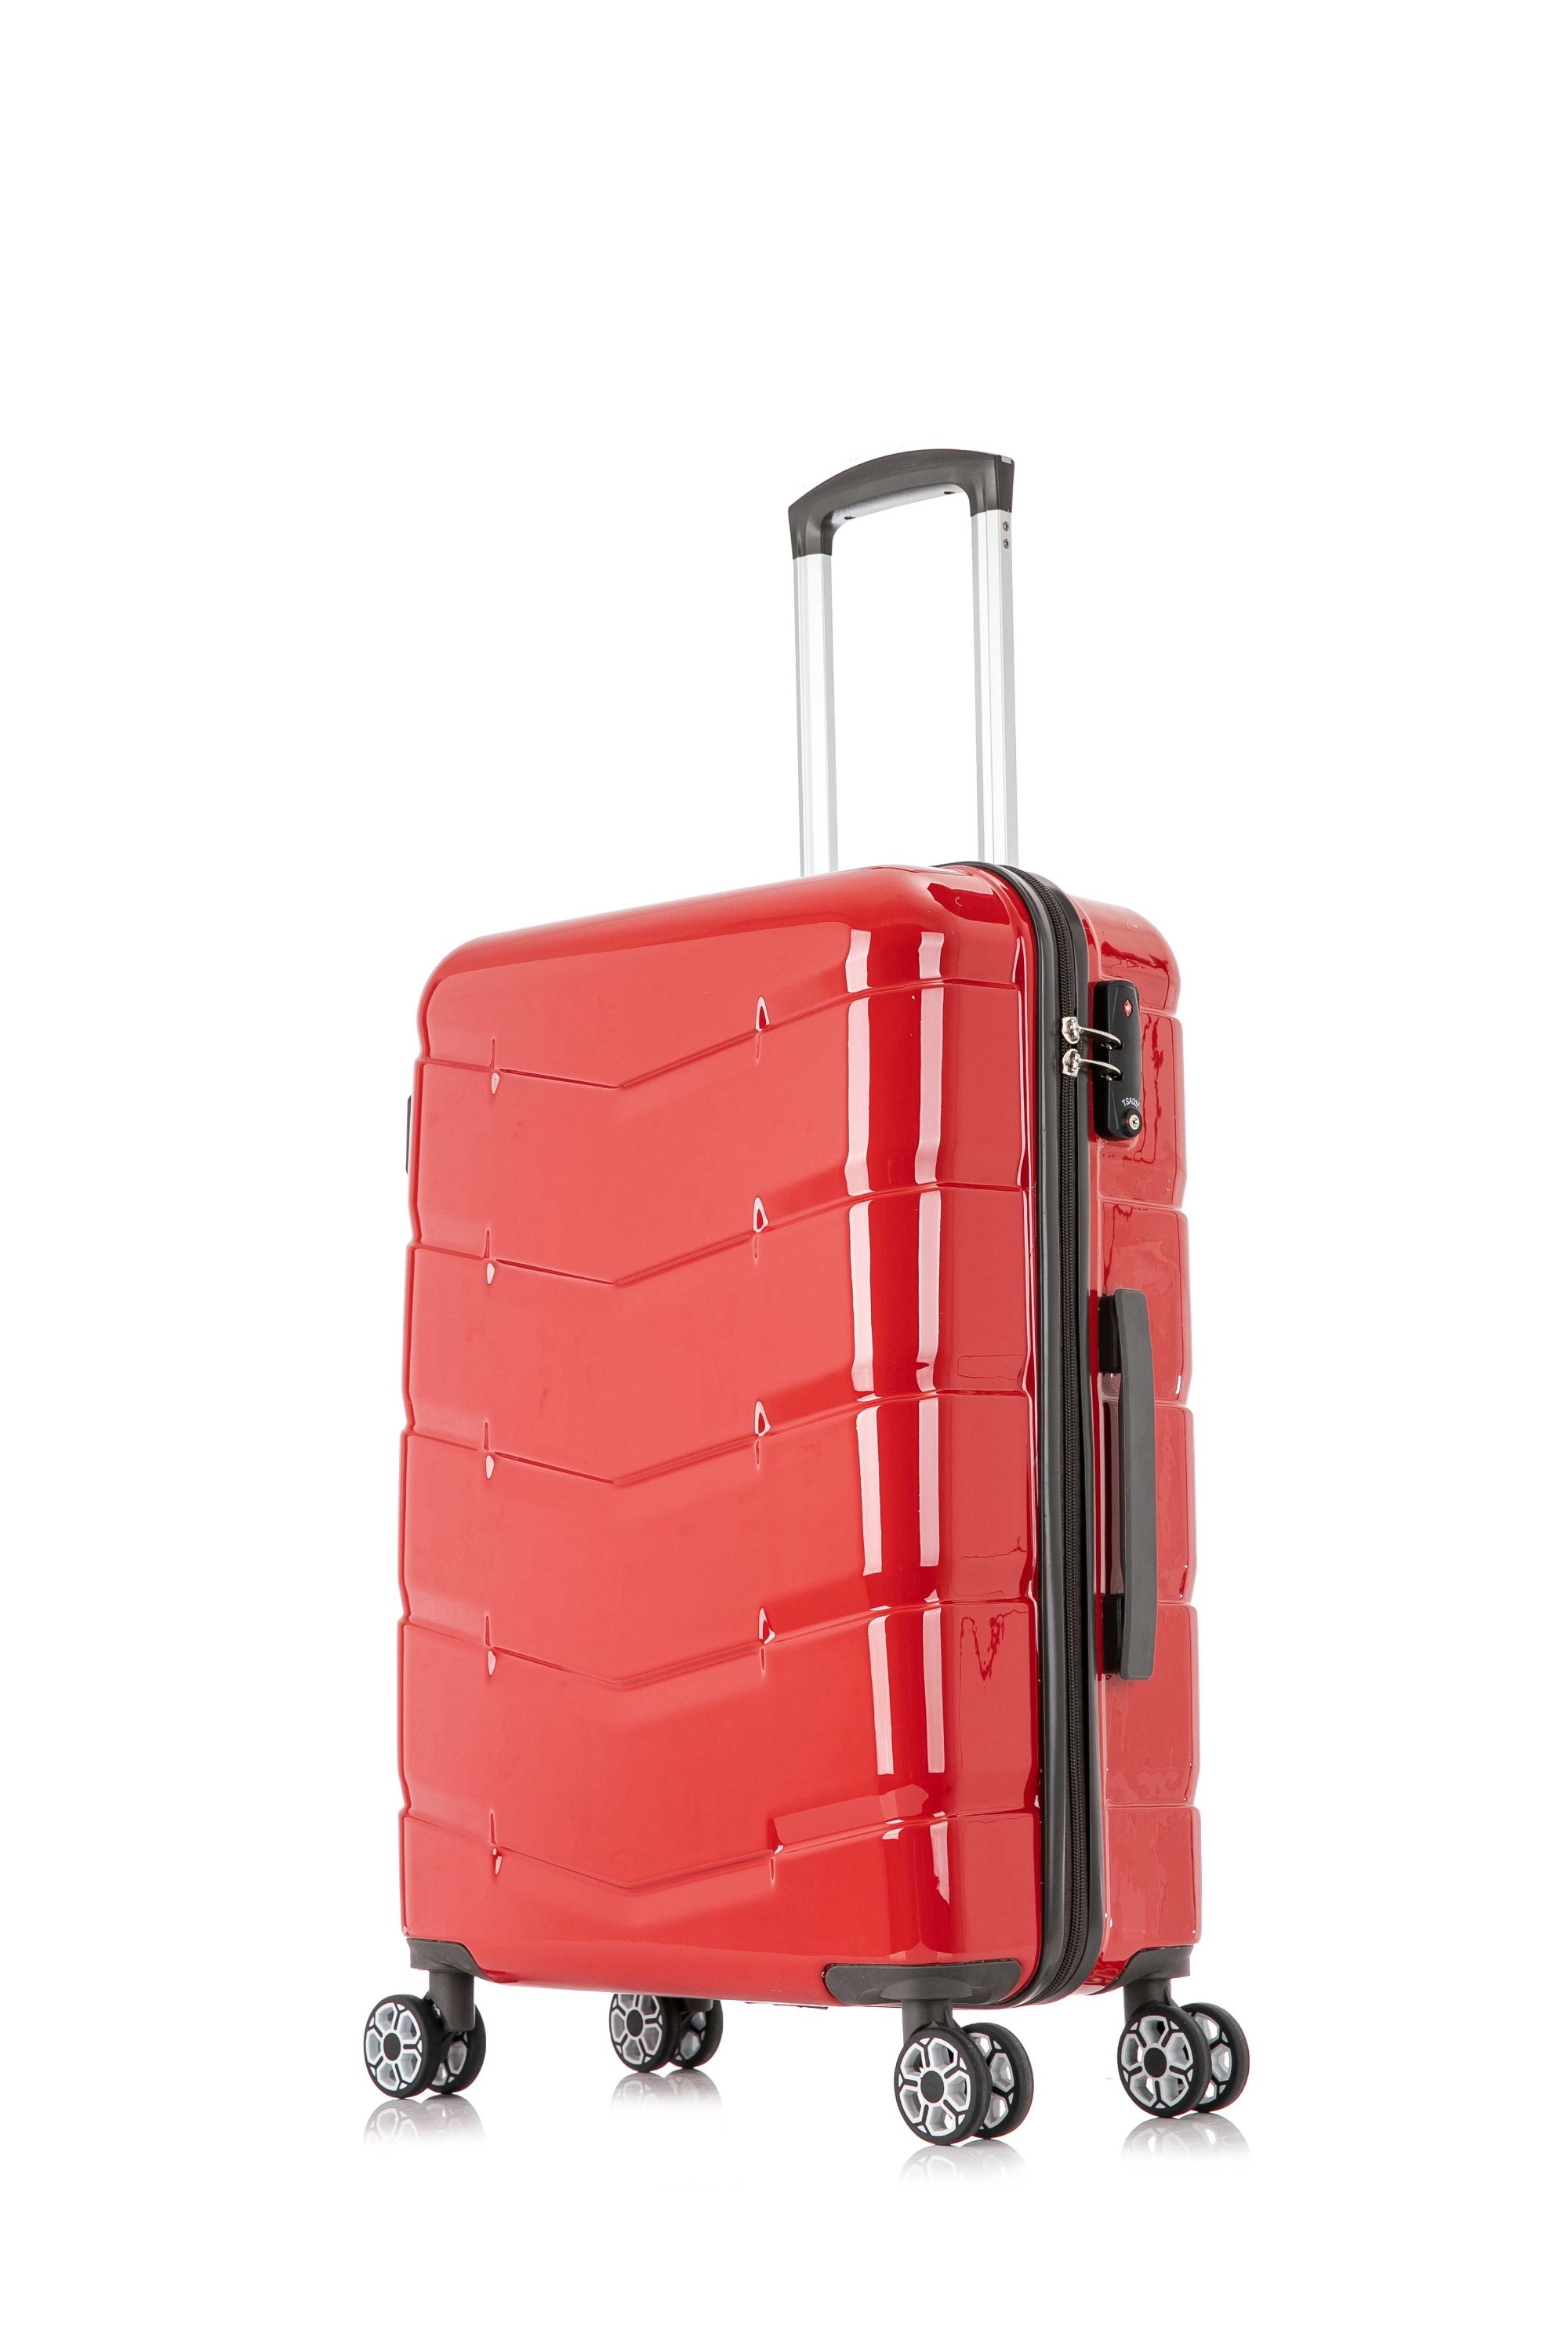 Traveler's Choice - PC Luggage - 1001